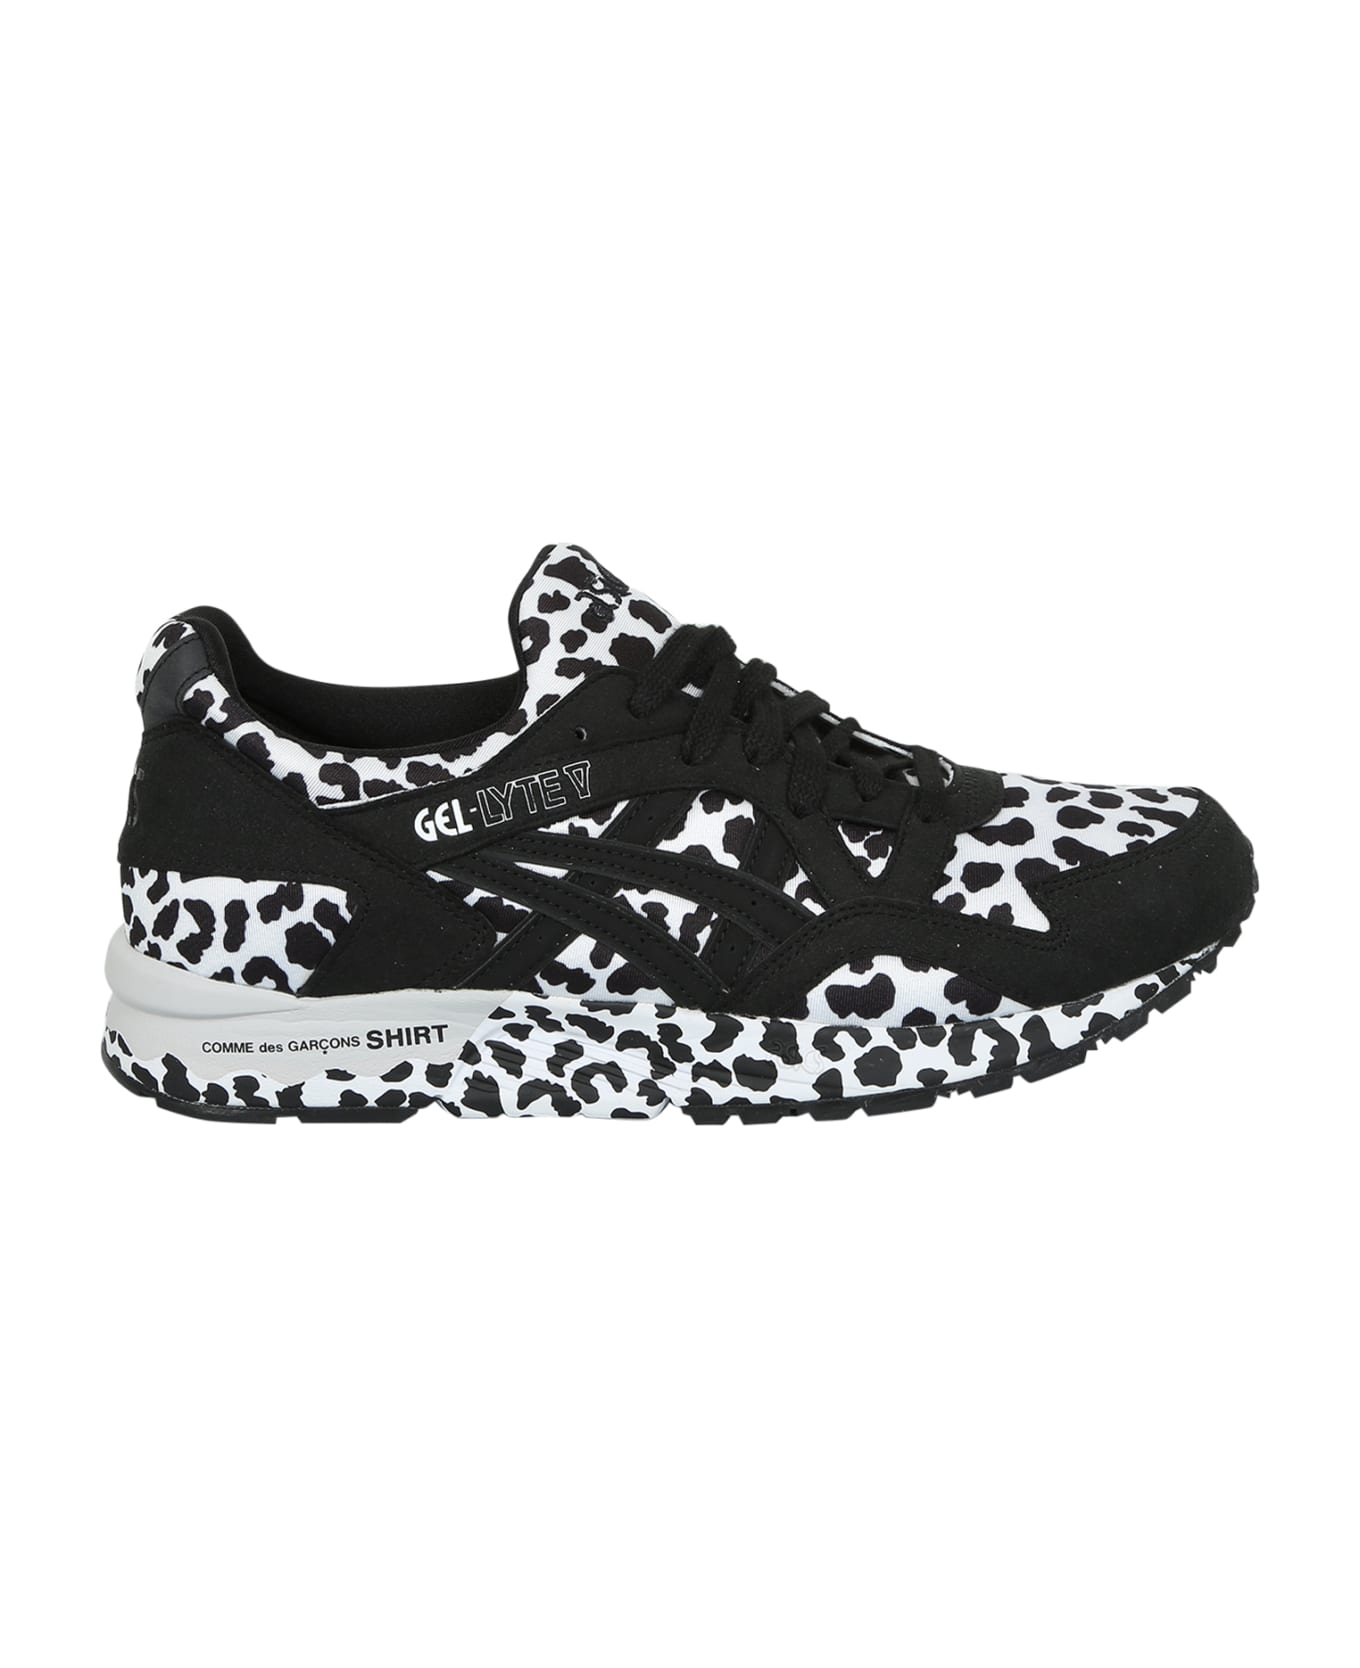 Comme des Garçons Shirt Leopard Print Asics Gel Lyte Sneakers - Black